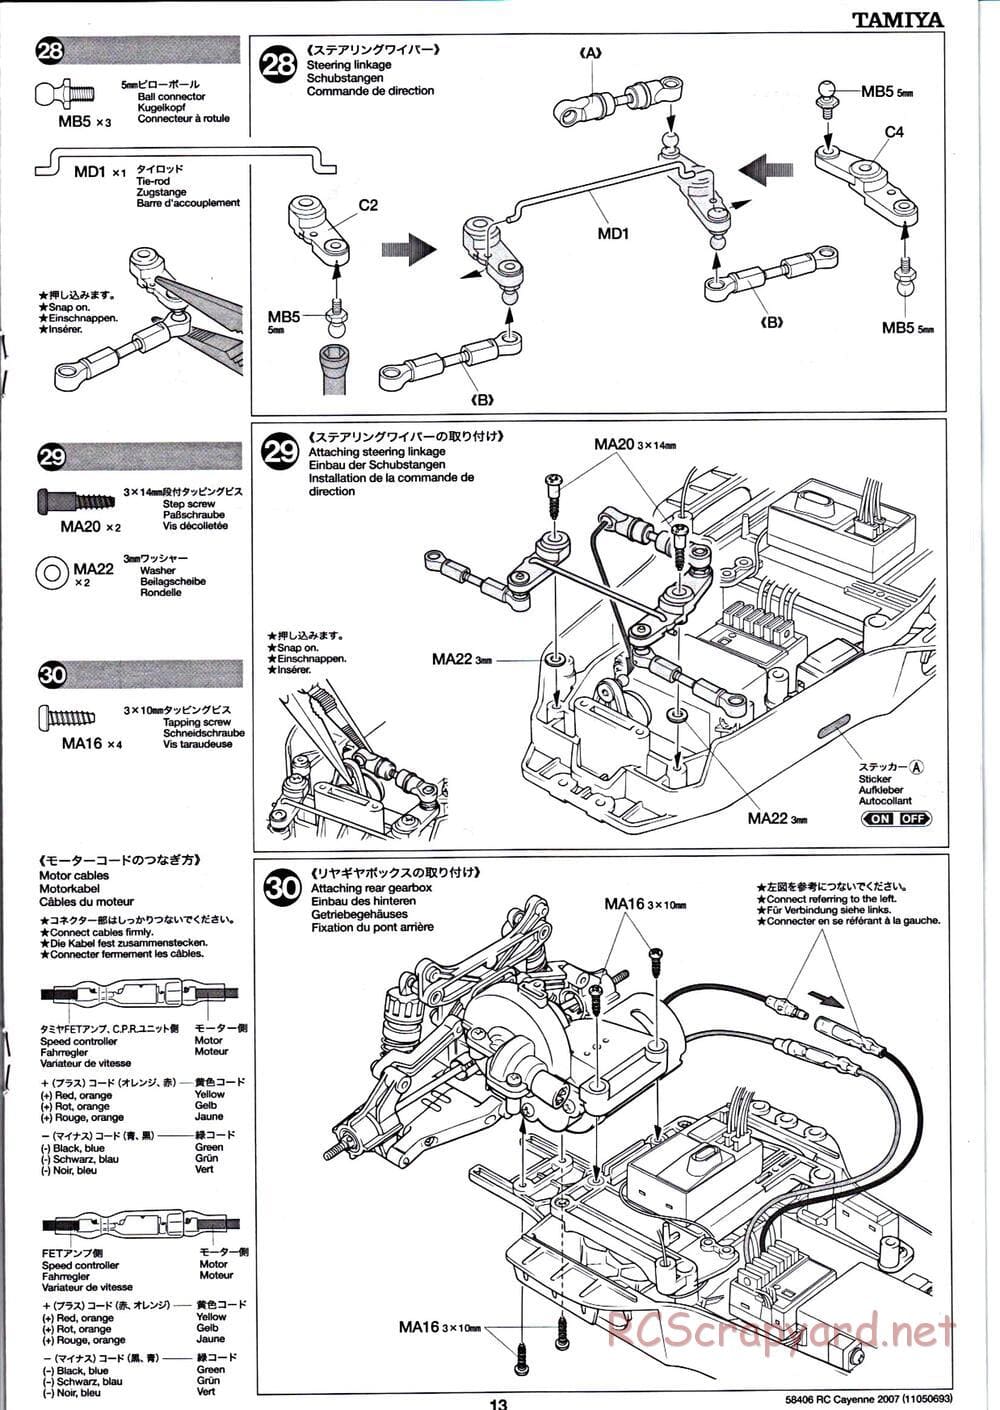 Tamiya - Cayenne S Transsyberia 2007 Chassis - Manual - Page 13